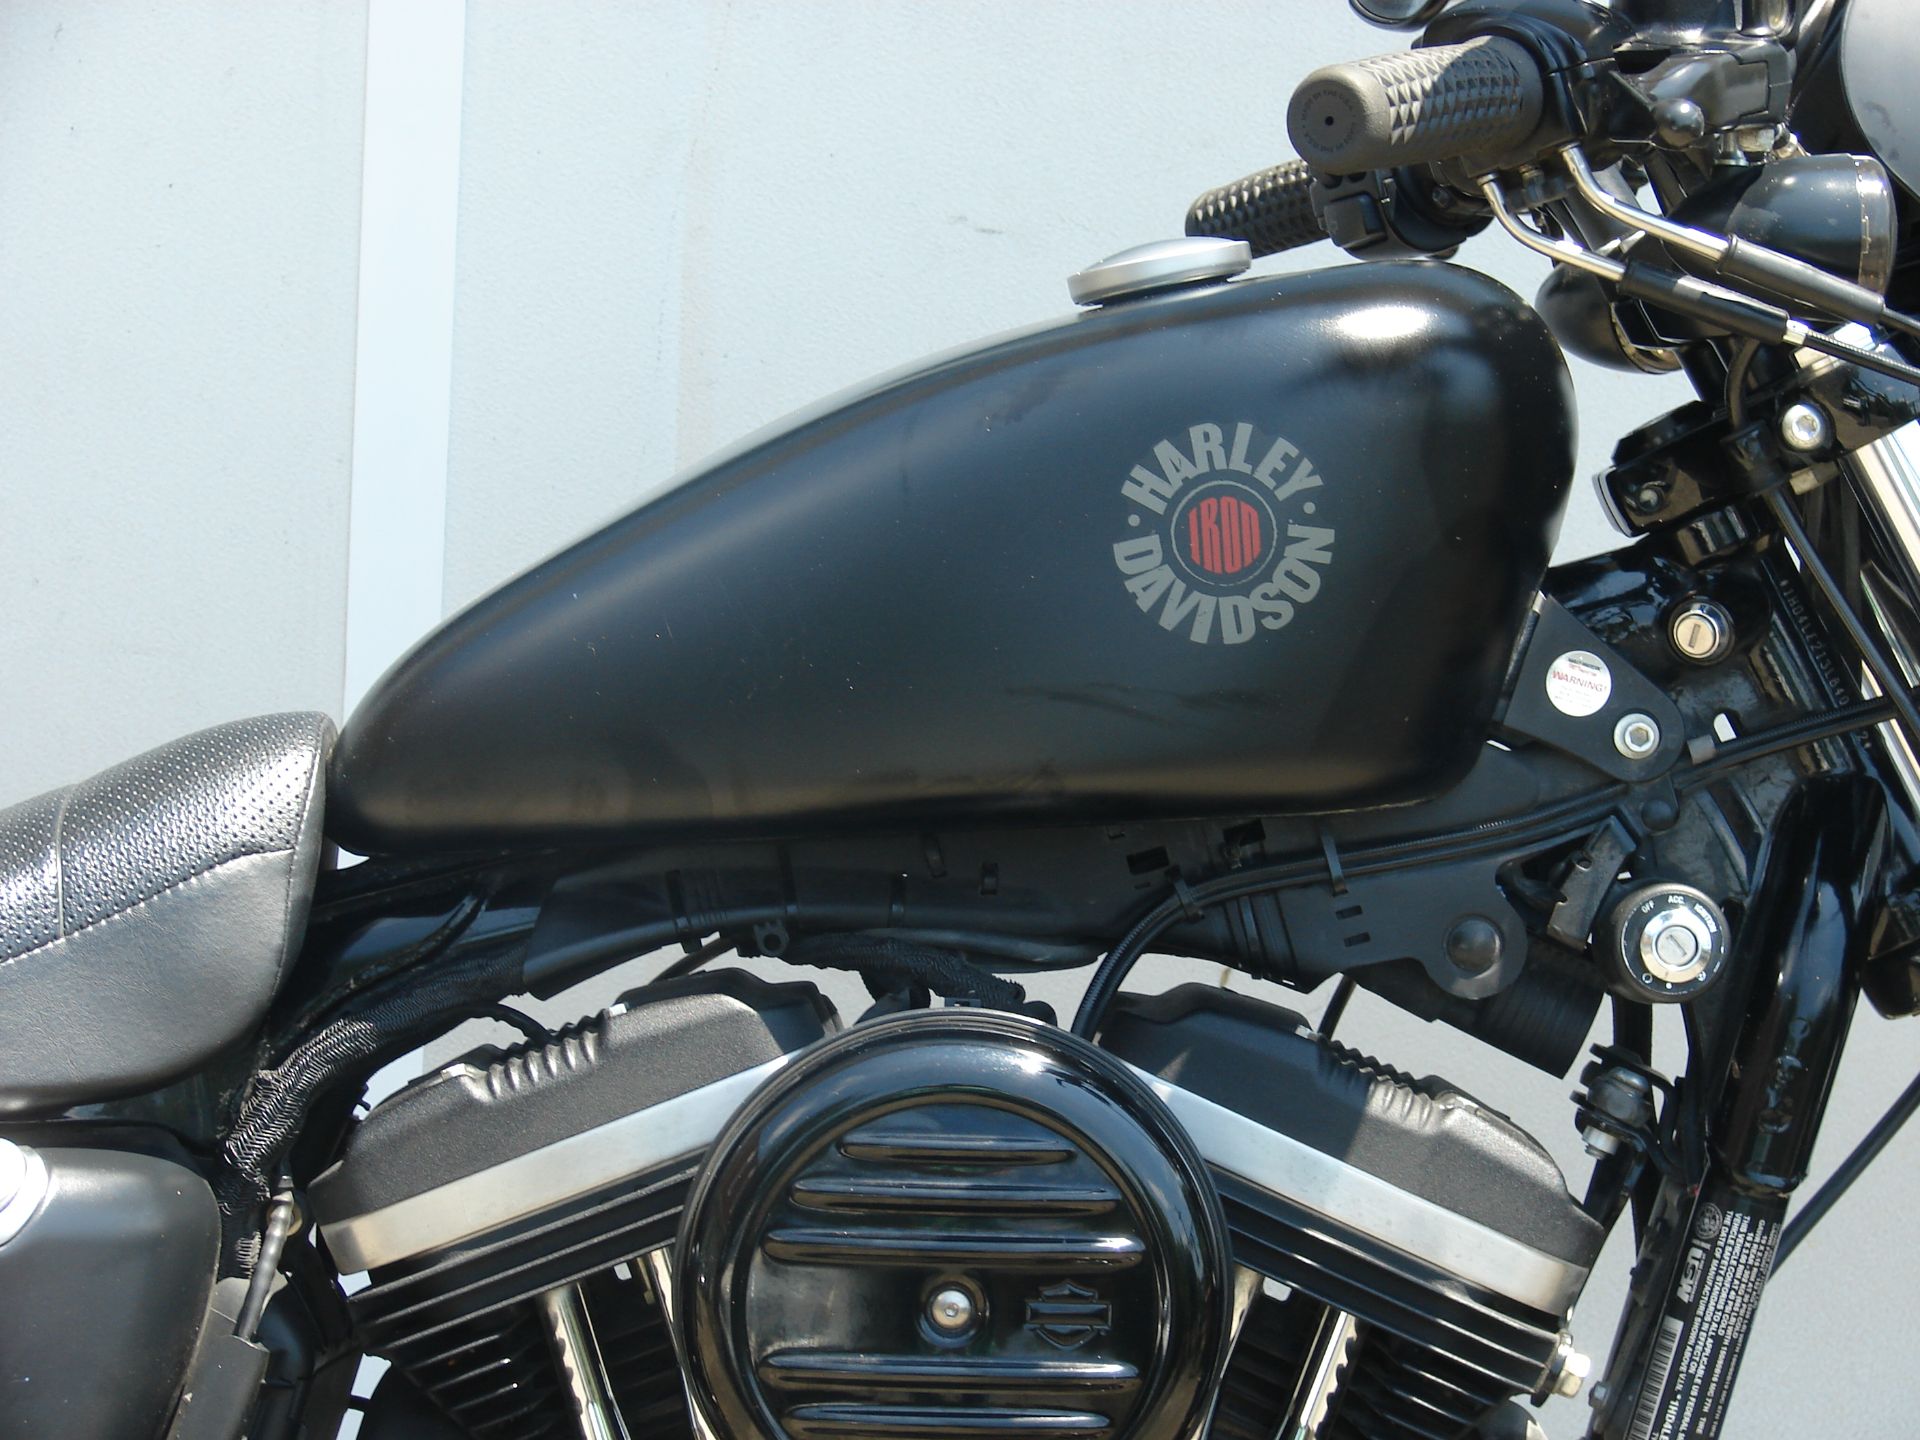 2020 Harley-Davidson XL 883 N Iron Nightster in Williamstown, New Jersey - Photo 11